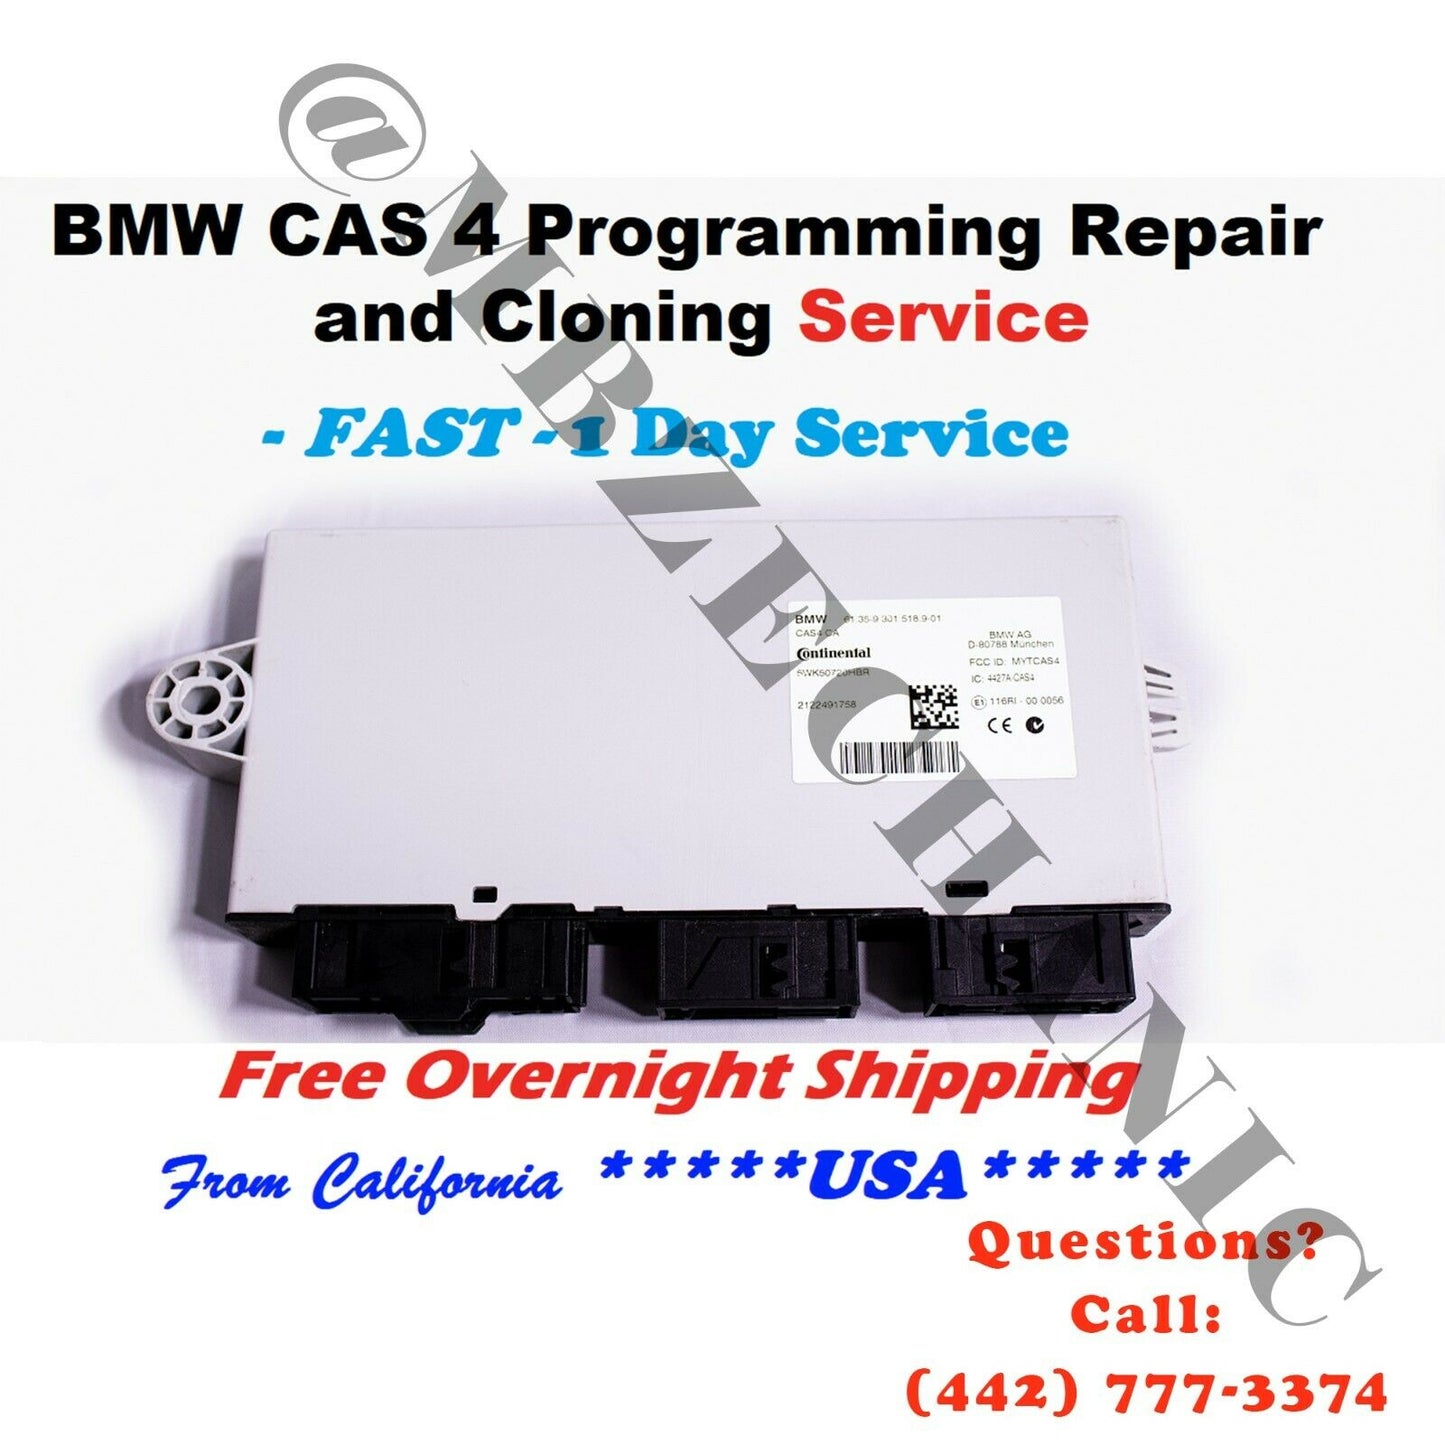 Rolls Royce CAS4 4+Repair Clone Programming SERVICE 61359367376 61 35 9 367 376